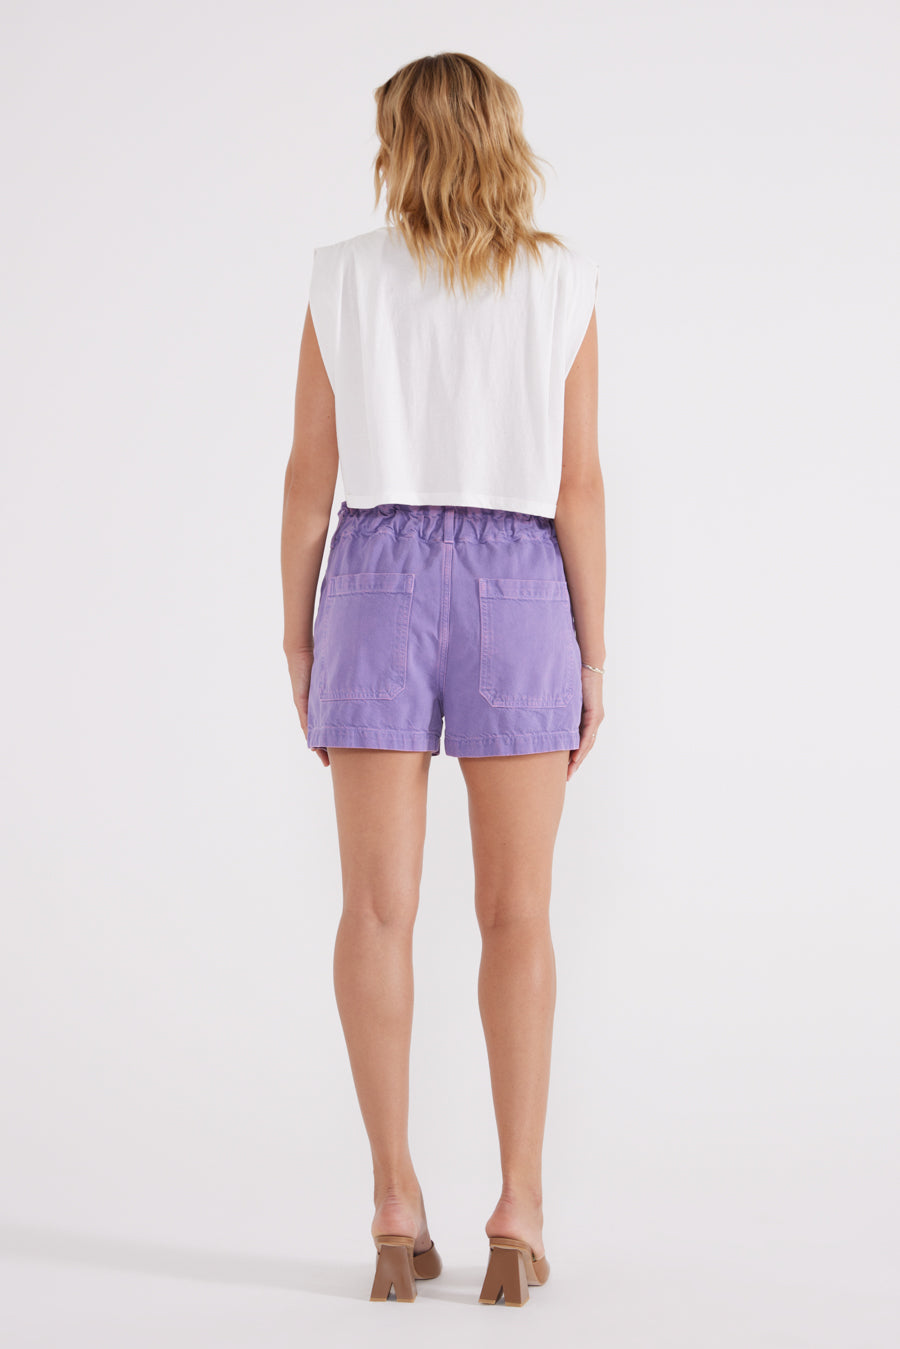 Milena Paperbag Shorts- English Lavender**FINAL SALE**